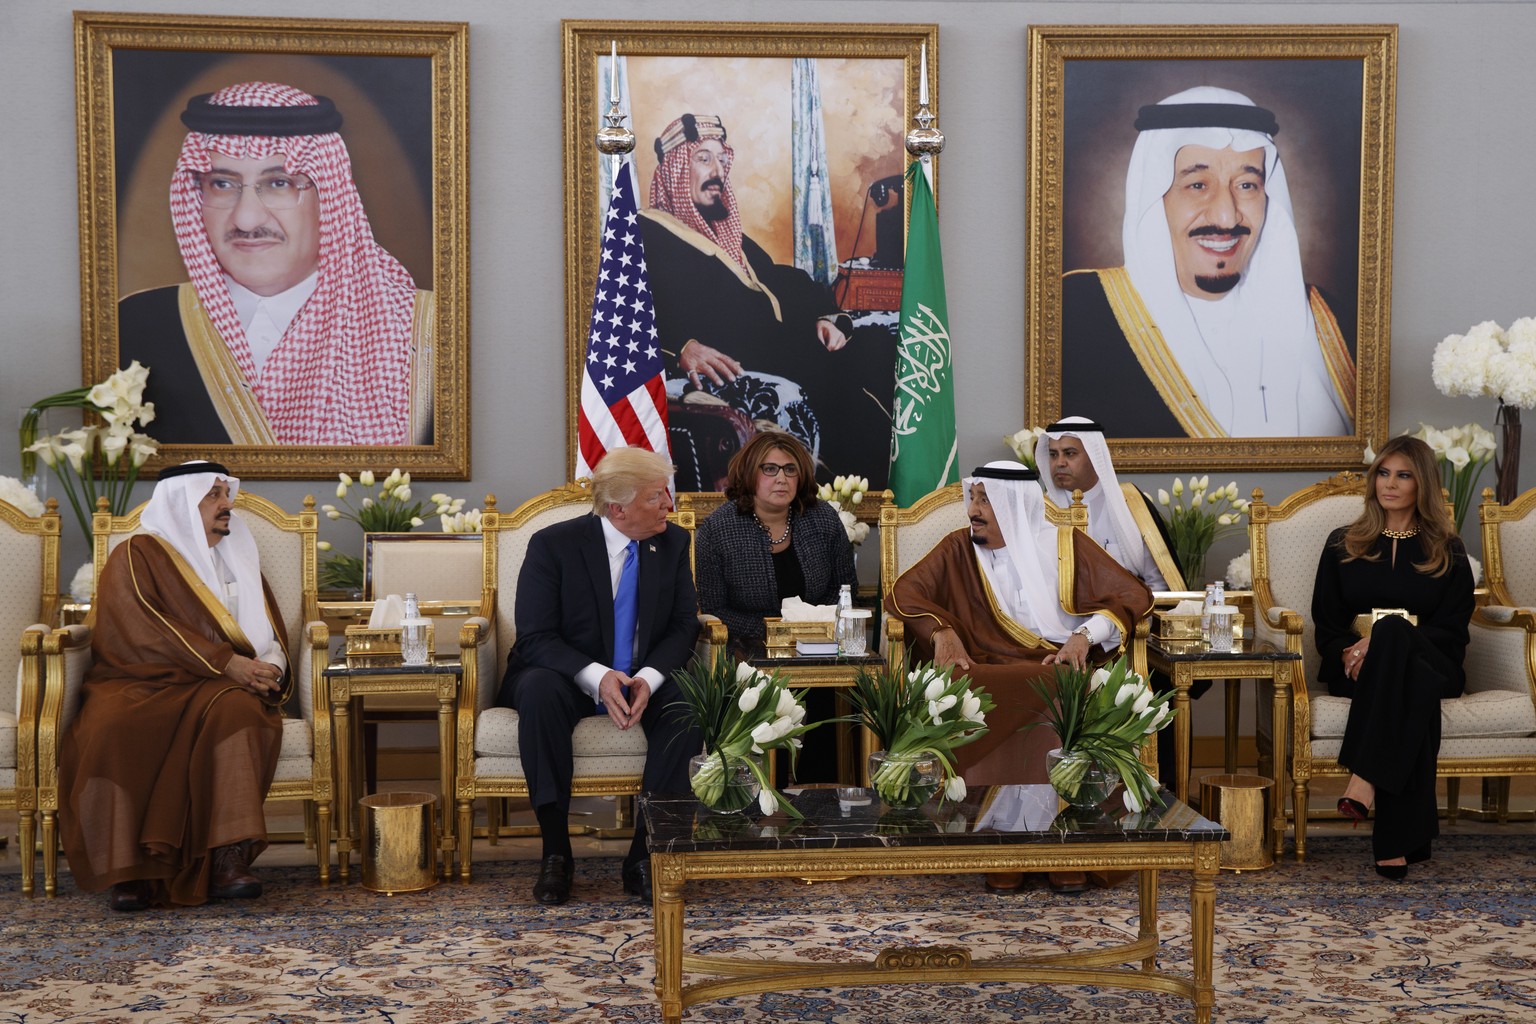 President Donald Trump meets with Saudi King Salman after a welcome ceremony at the Royal Terminal of King Khalid International Airport, Saturday, May 20, 2017, in Riyadh. (AP Photo/Evan Vucci)